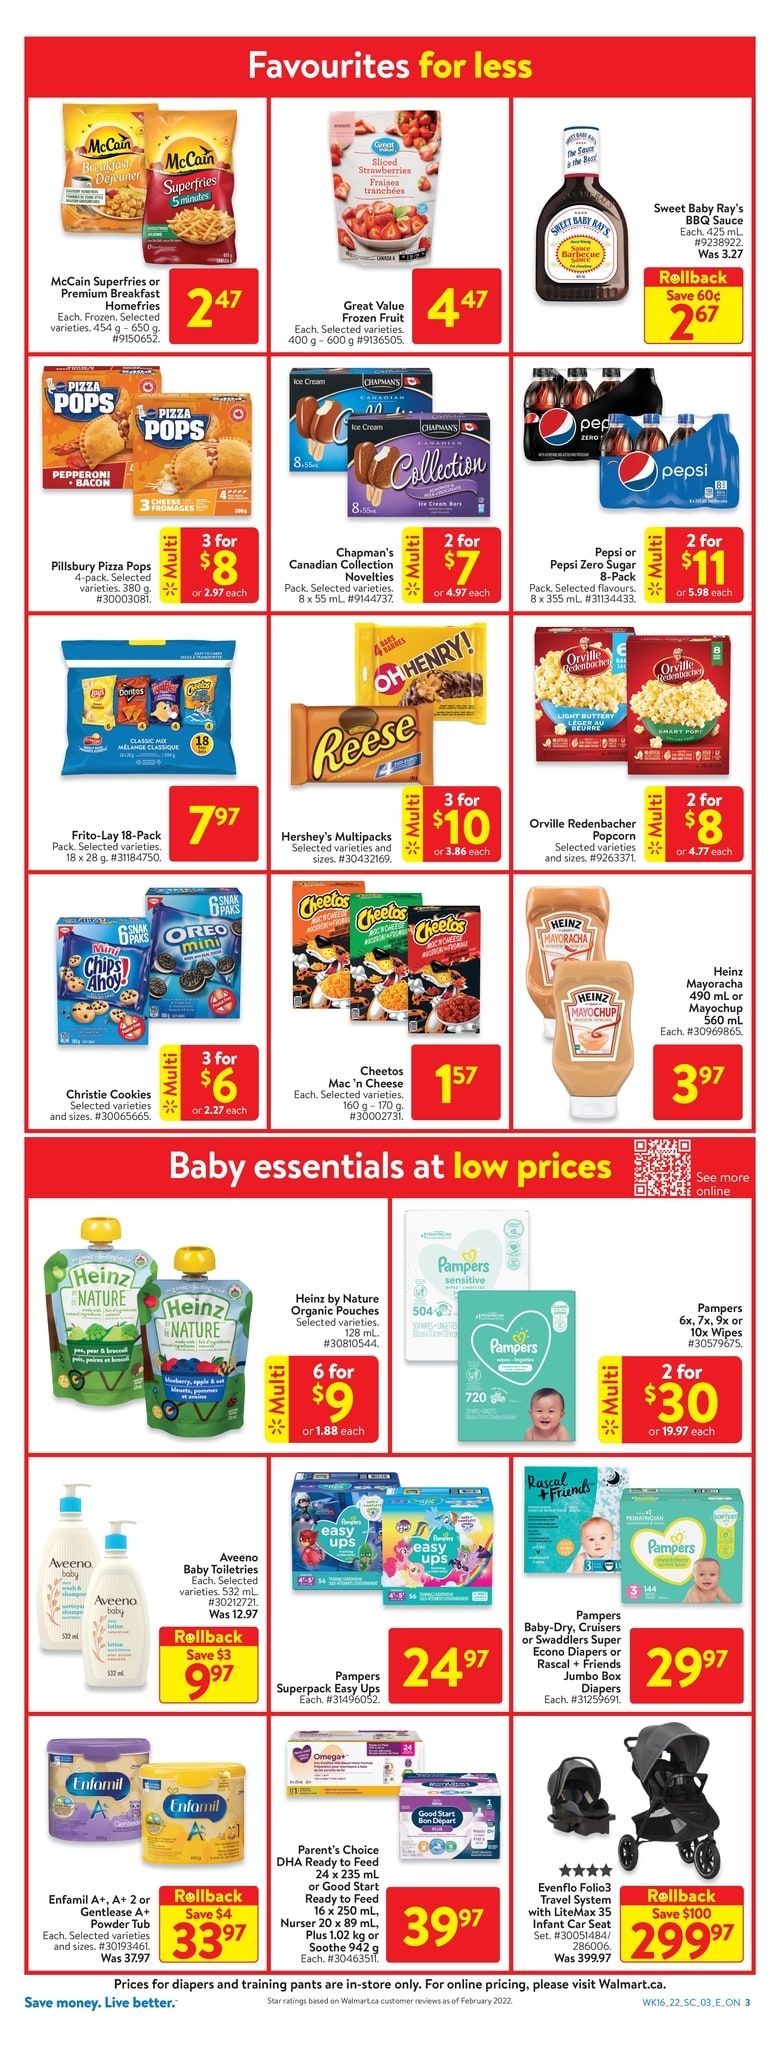 Walmart - Weekly Flyer Specials - Page 5